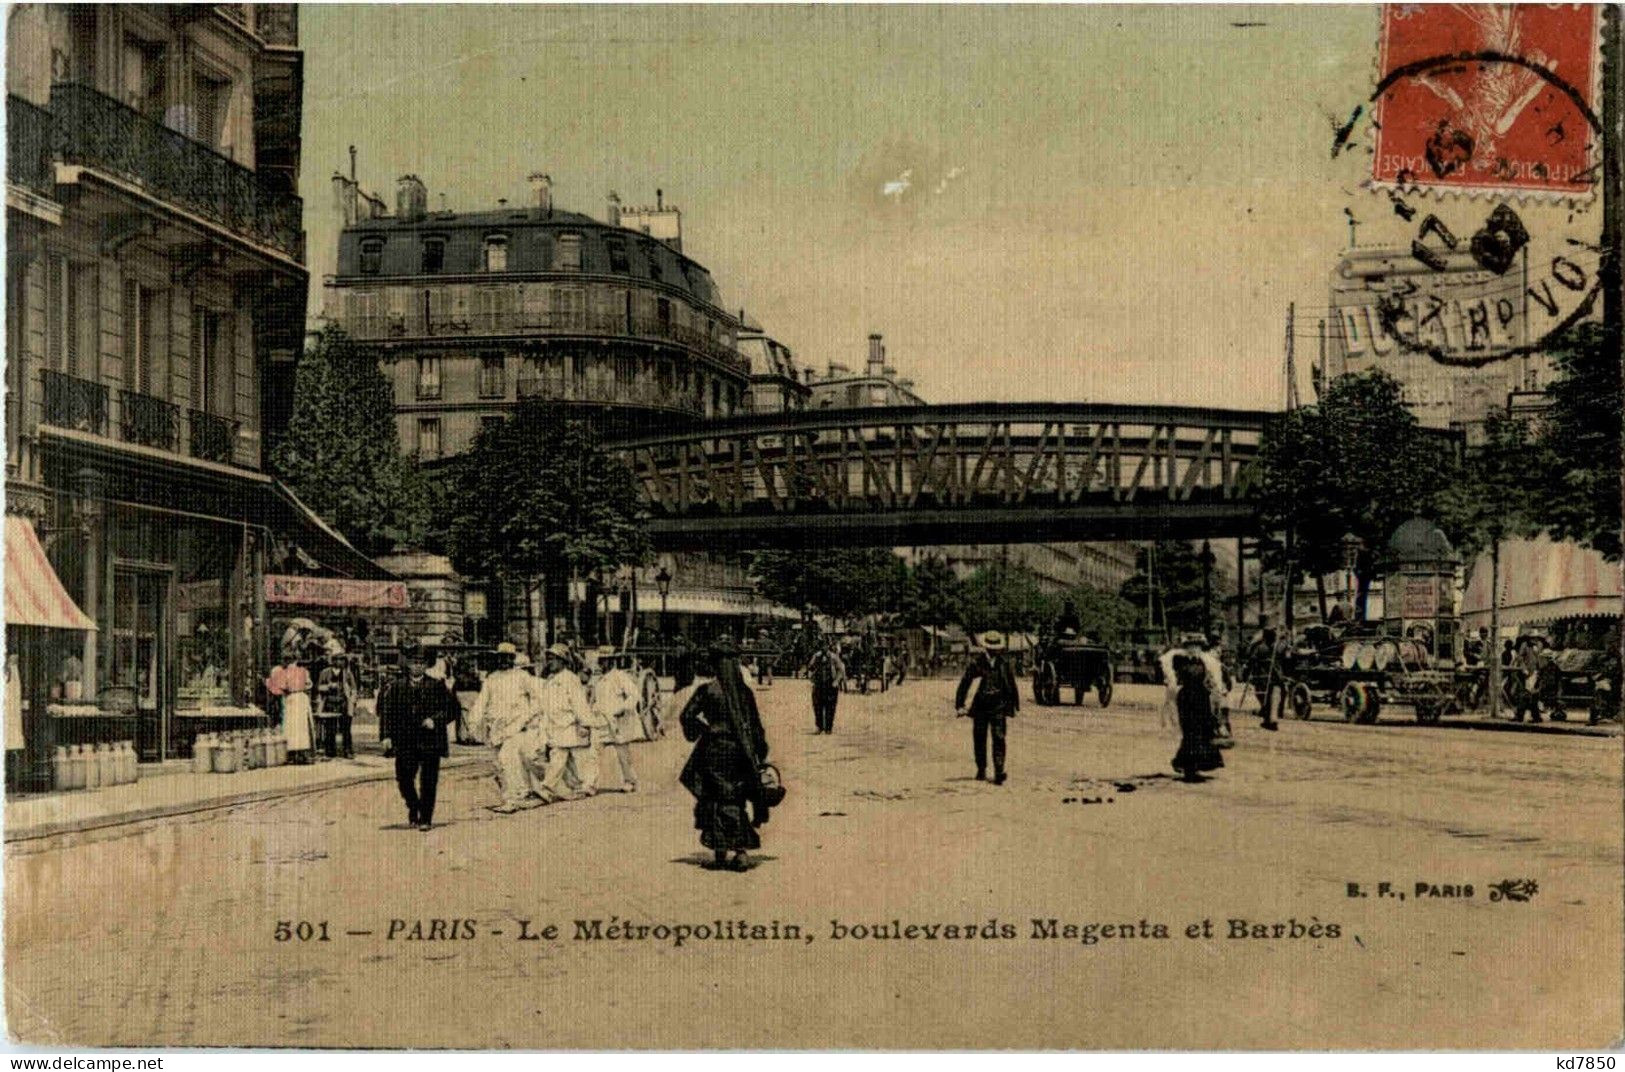 Paris - Metropolitain - Métro Parisien, Gares